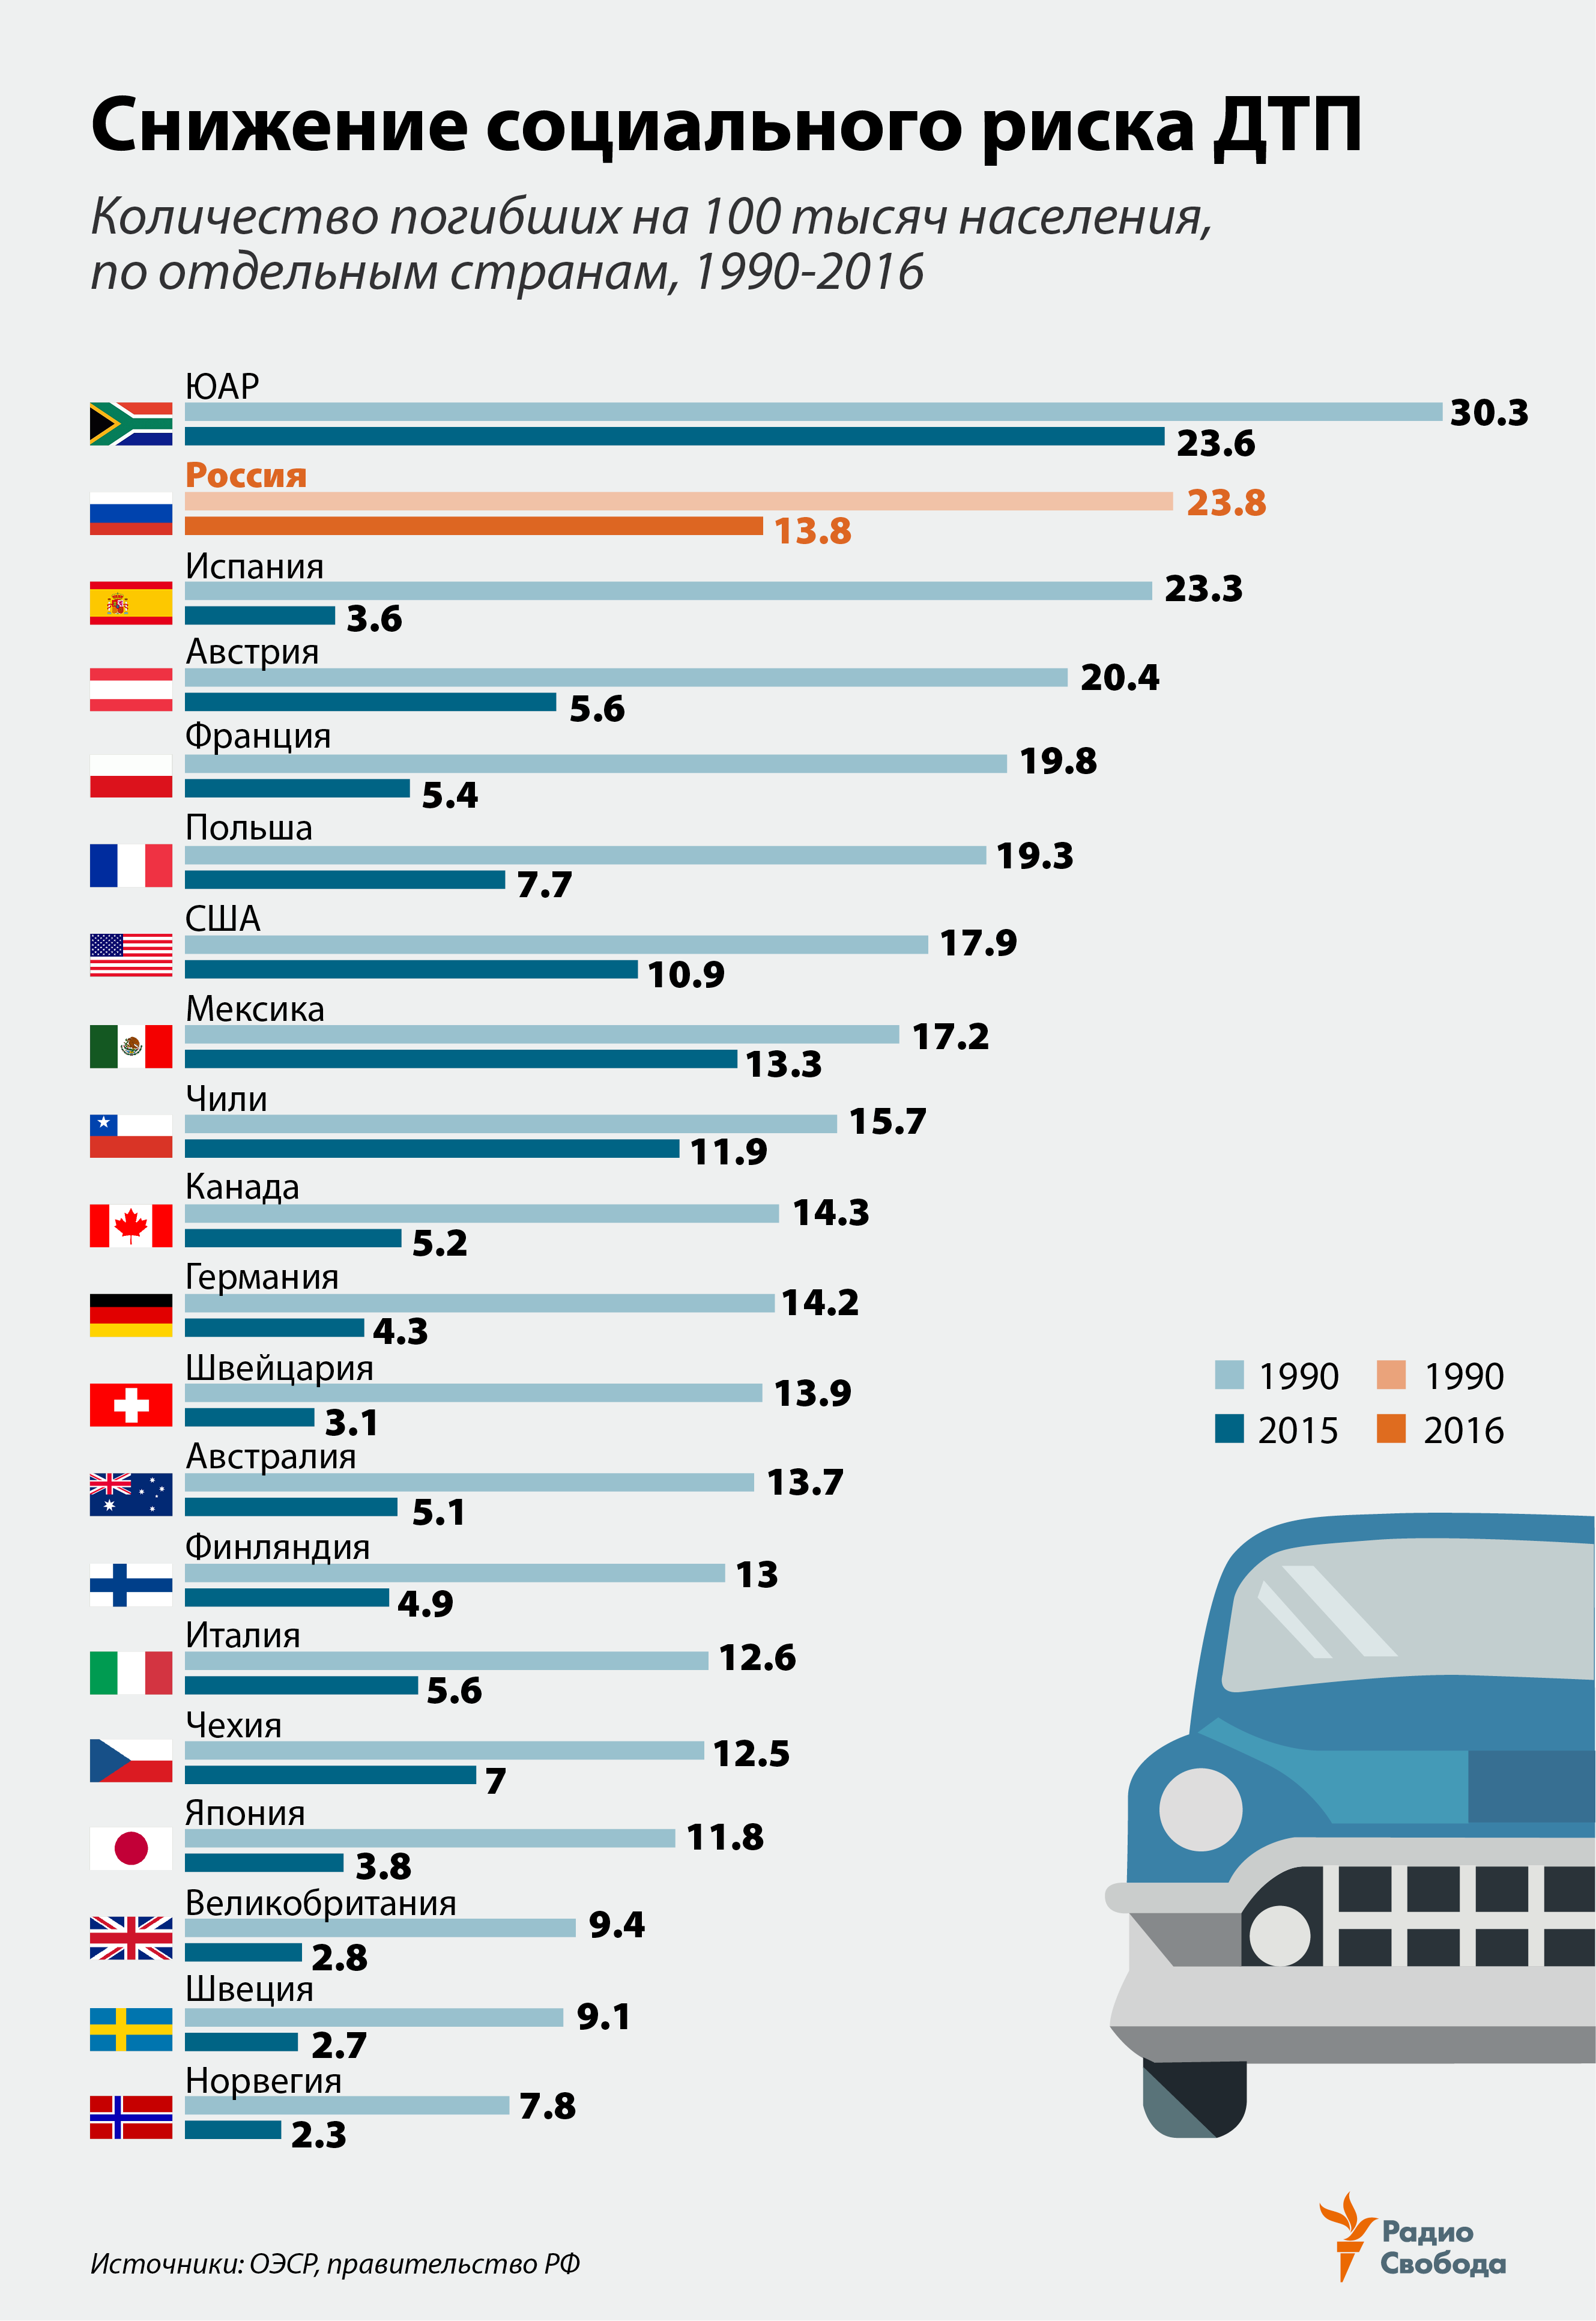 Russia-Factograph-Road Fatalities-World-Russia-1991-2016